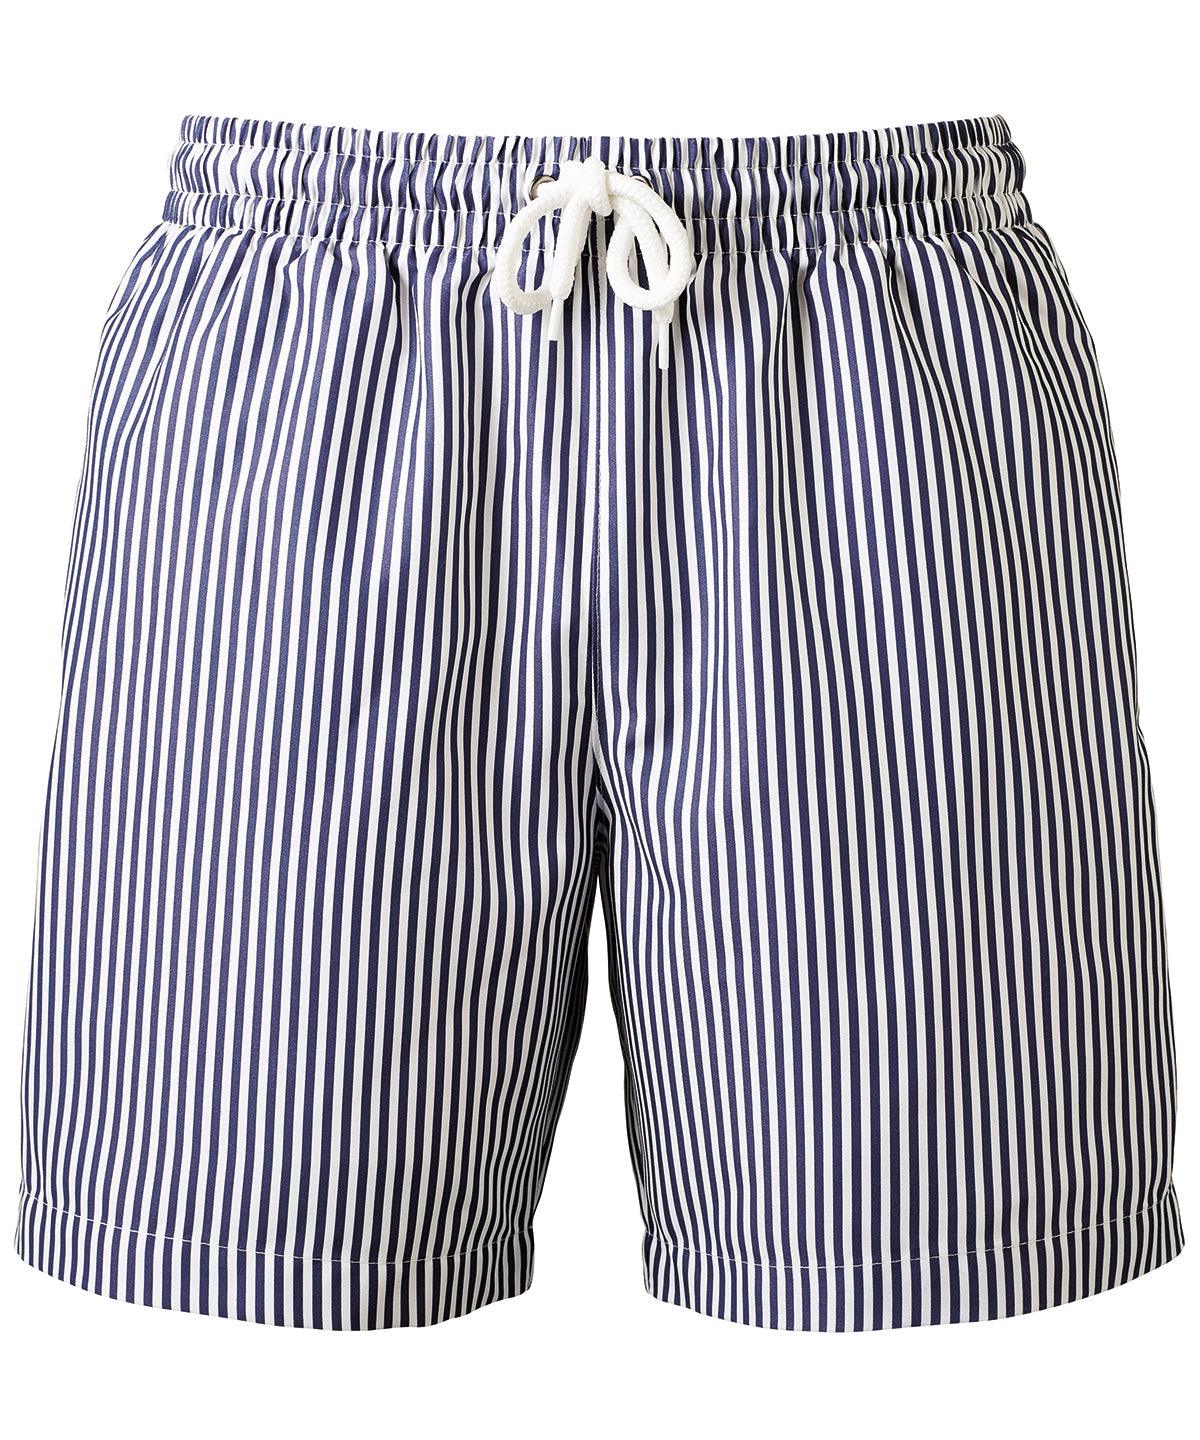 Navy/White Stripe - Men's swim shorts Shorts Wombat Exclusives, Holiday Season, Resortwear, Sports & Leisure, Trousers & Shorts Schoolwear Centres